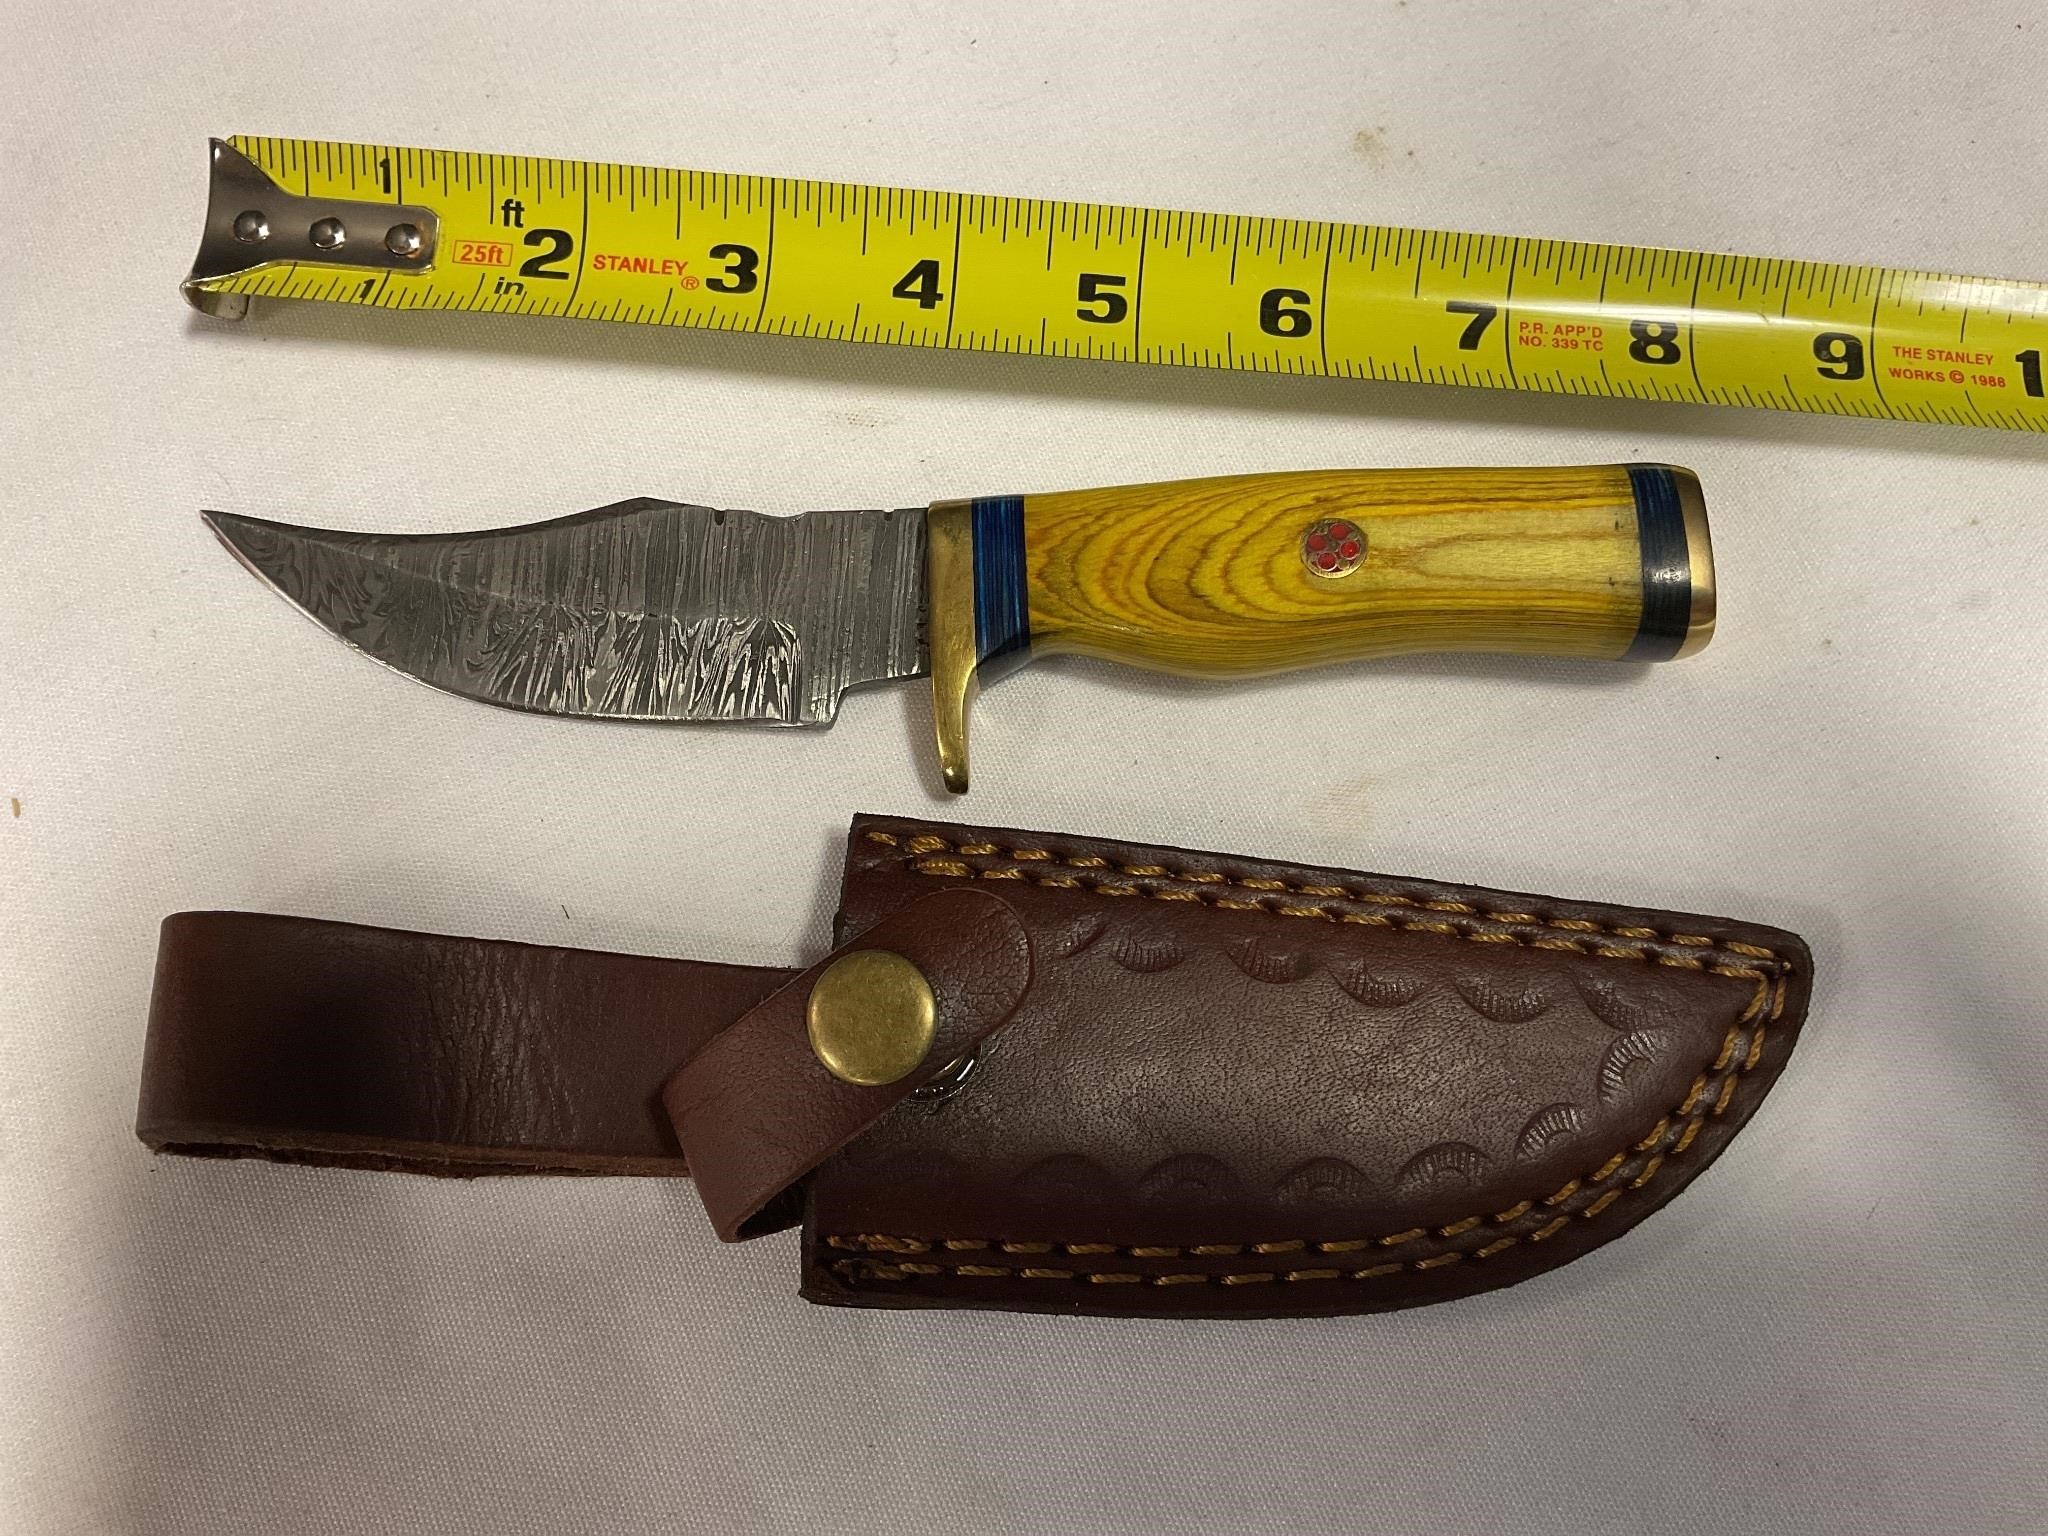 Damascus steel knife with sheath